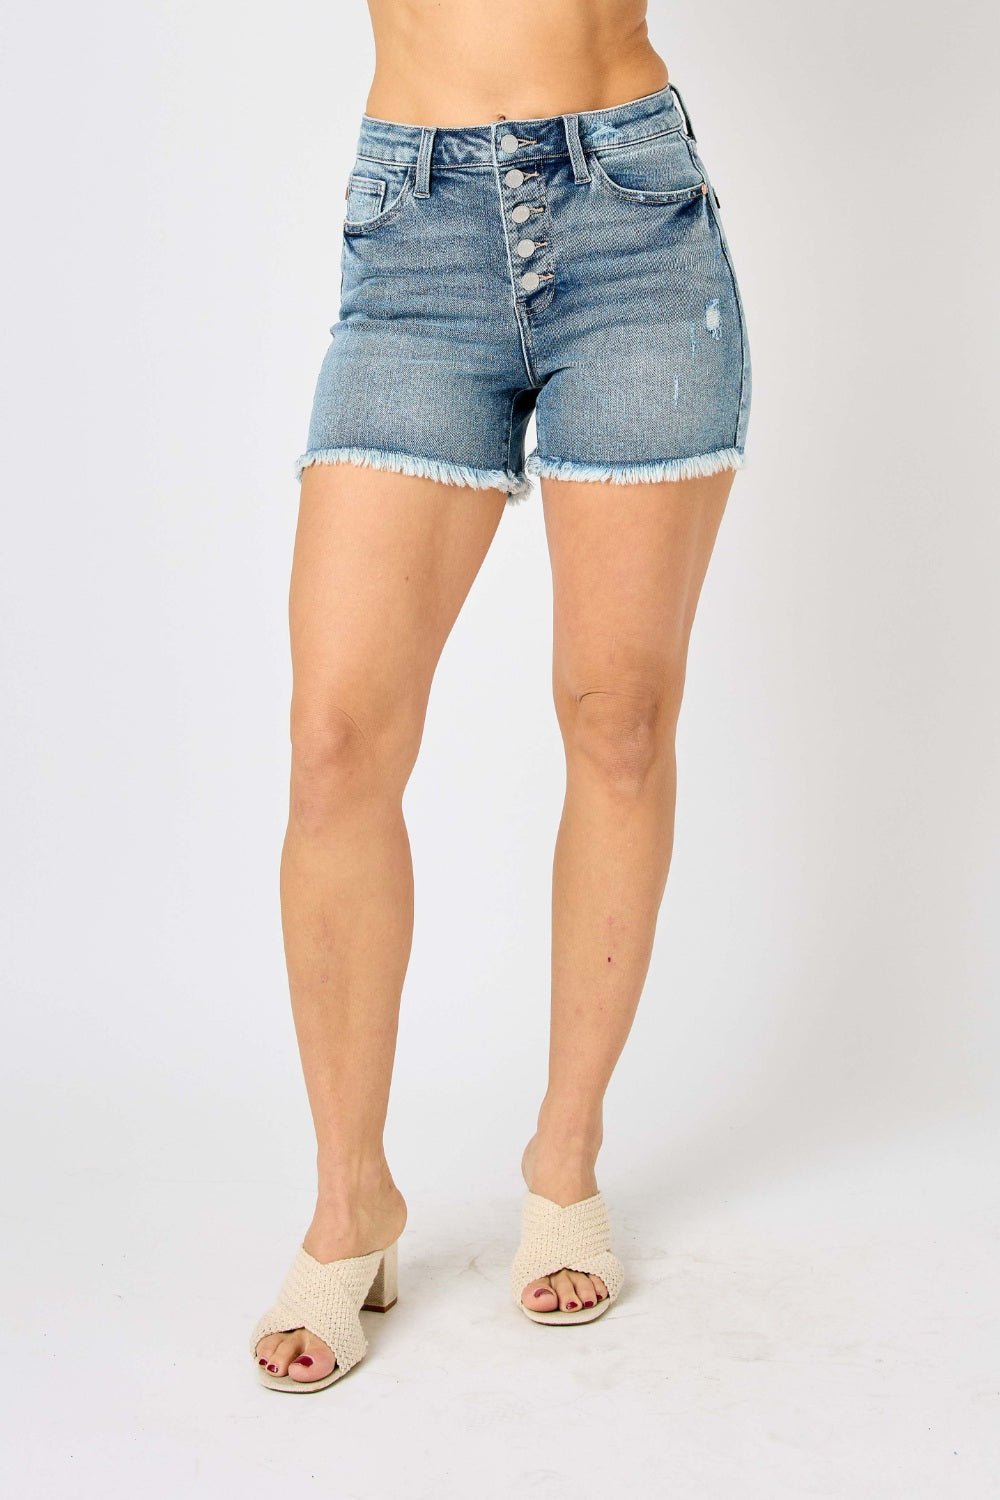 Judy Blue Full Size Button Fly Raw Hem Denim Shorts - My Threaded Apparel | Online Women's Boutique - denim shorts